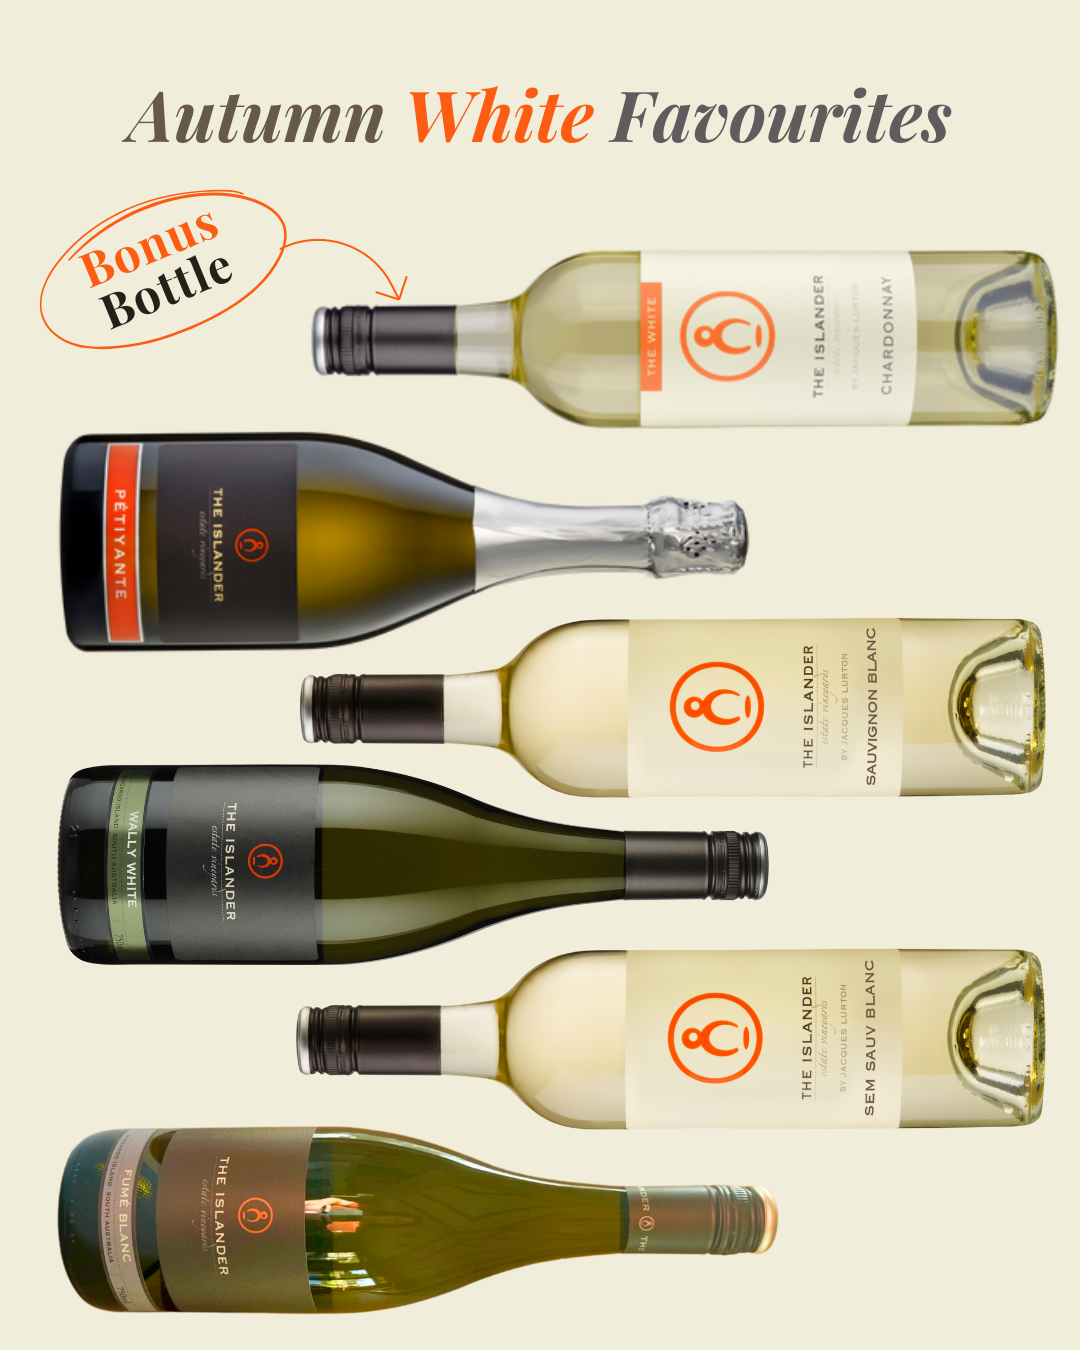 Autumn White Favourites Wine Pack by The Islander Estate Vineyards